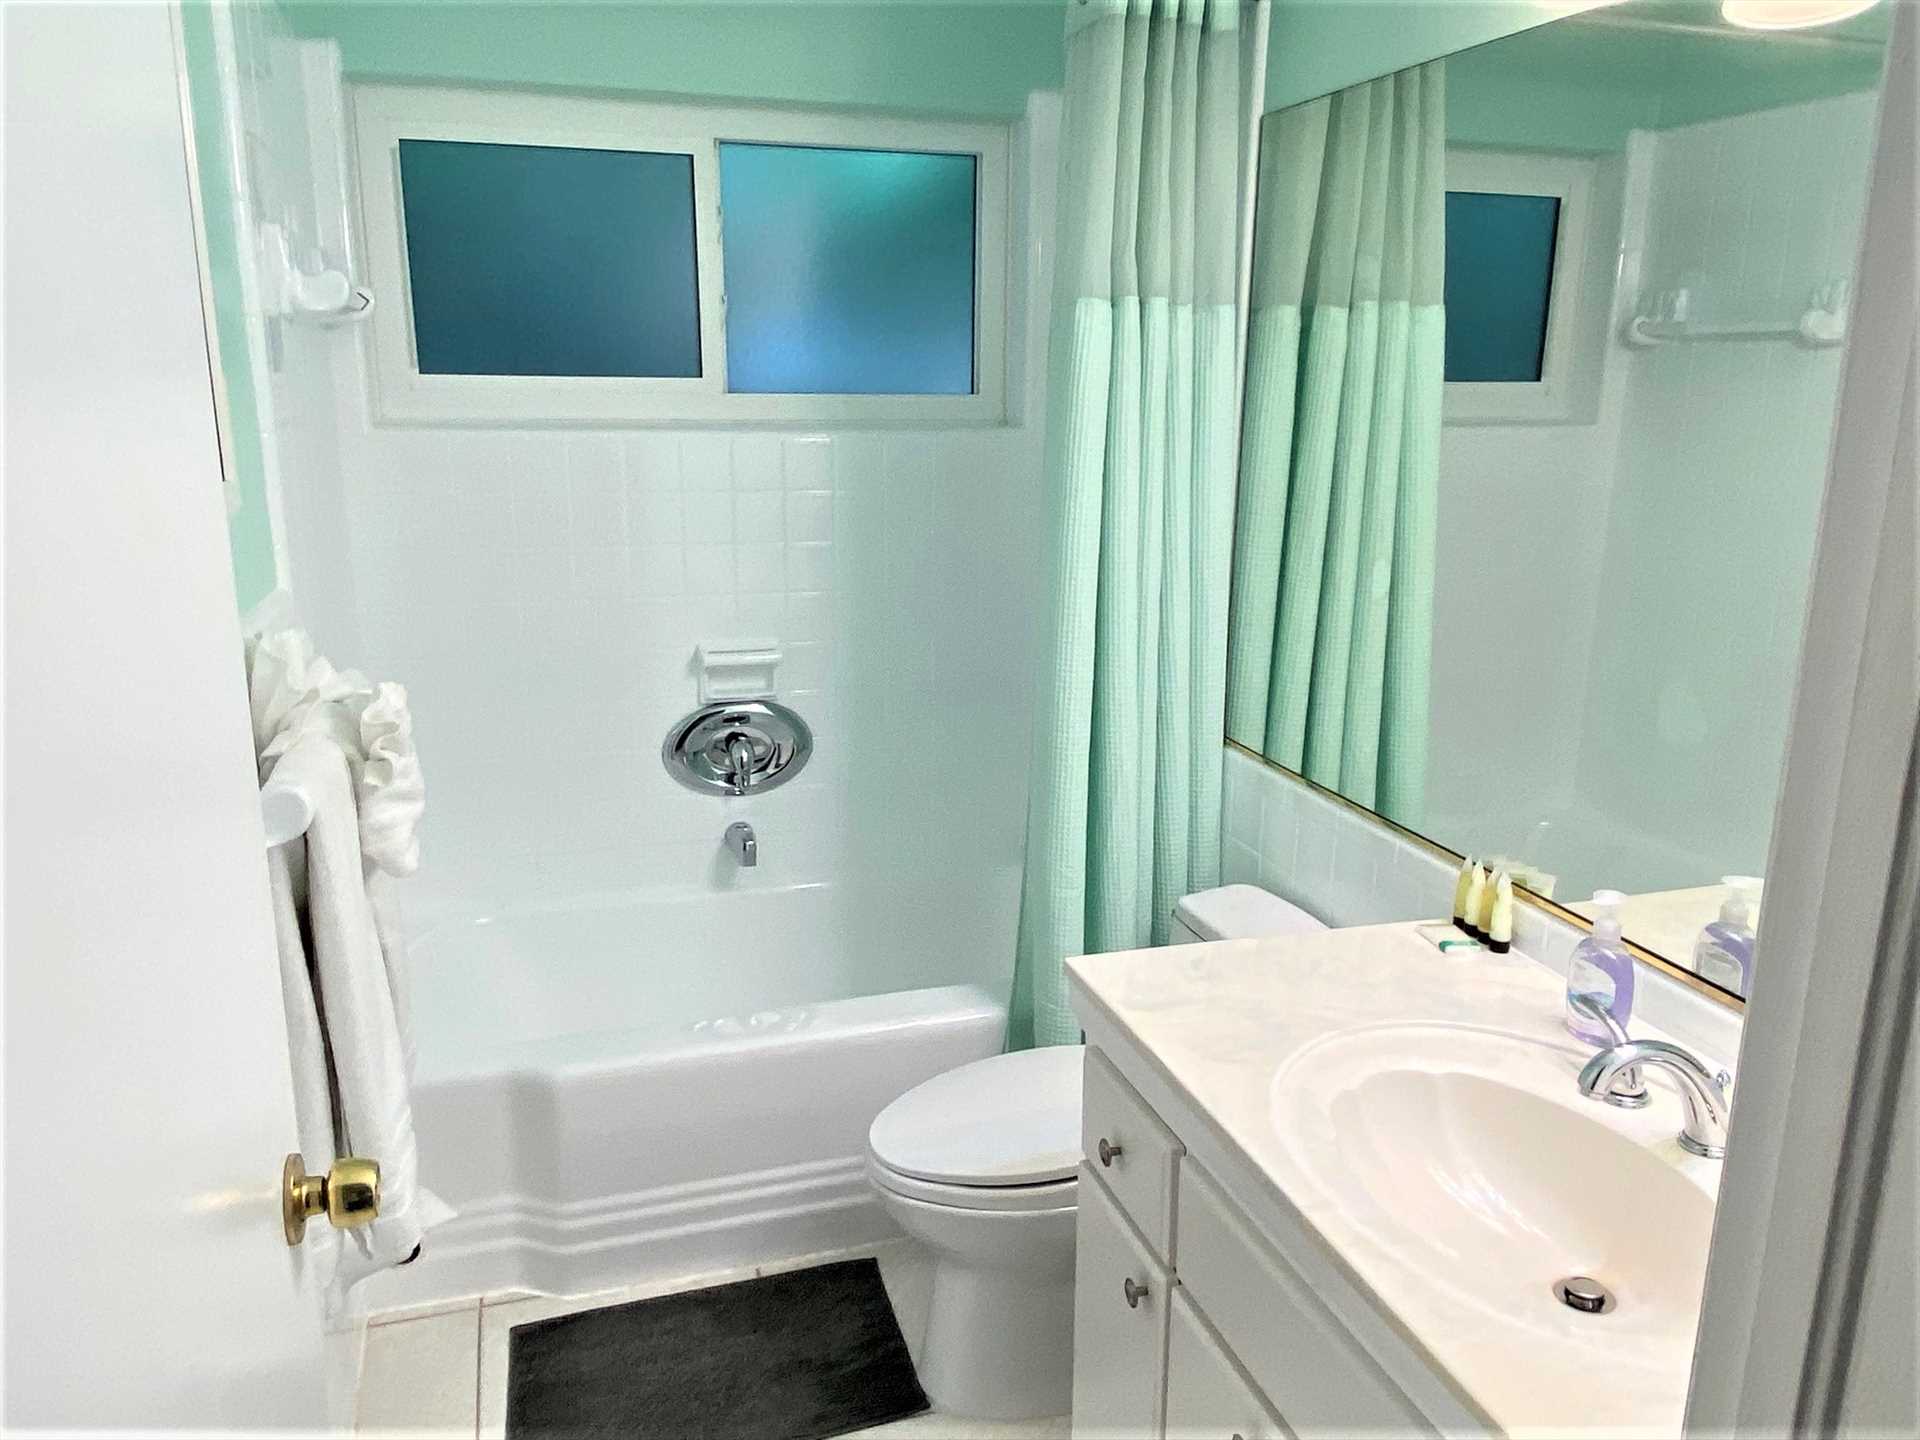 Main bath has combo tub and shower.